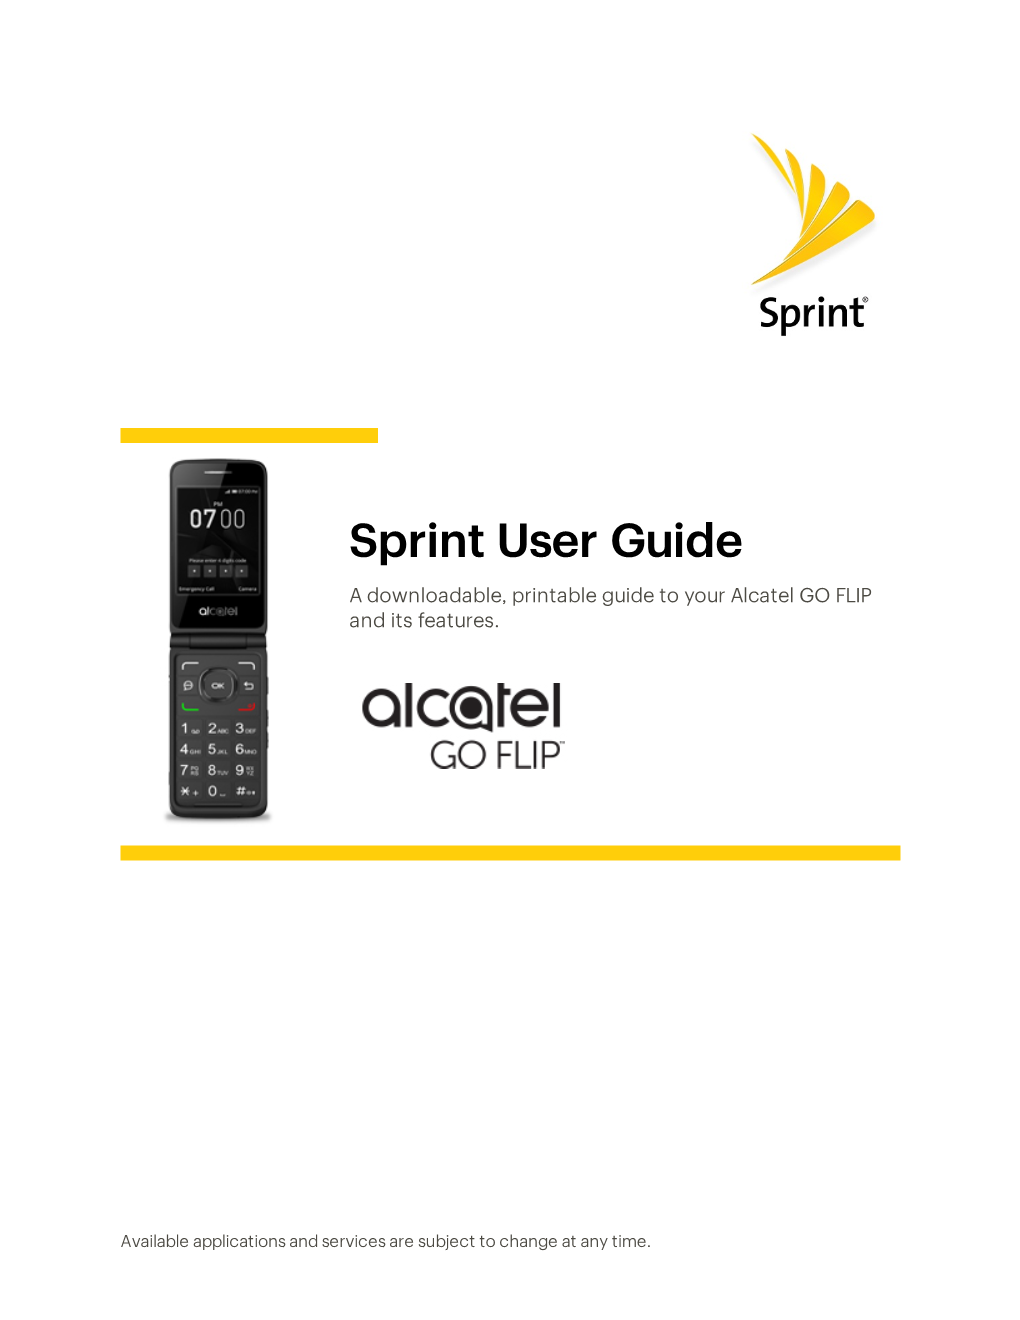 Alcatel GO FLIP User Guide